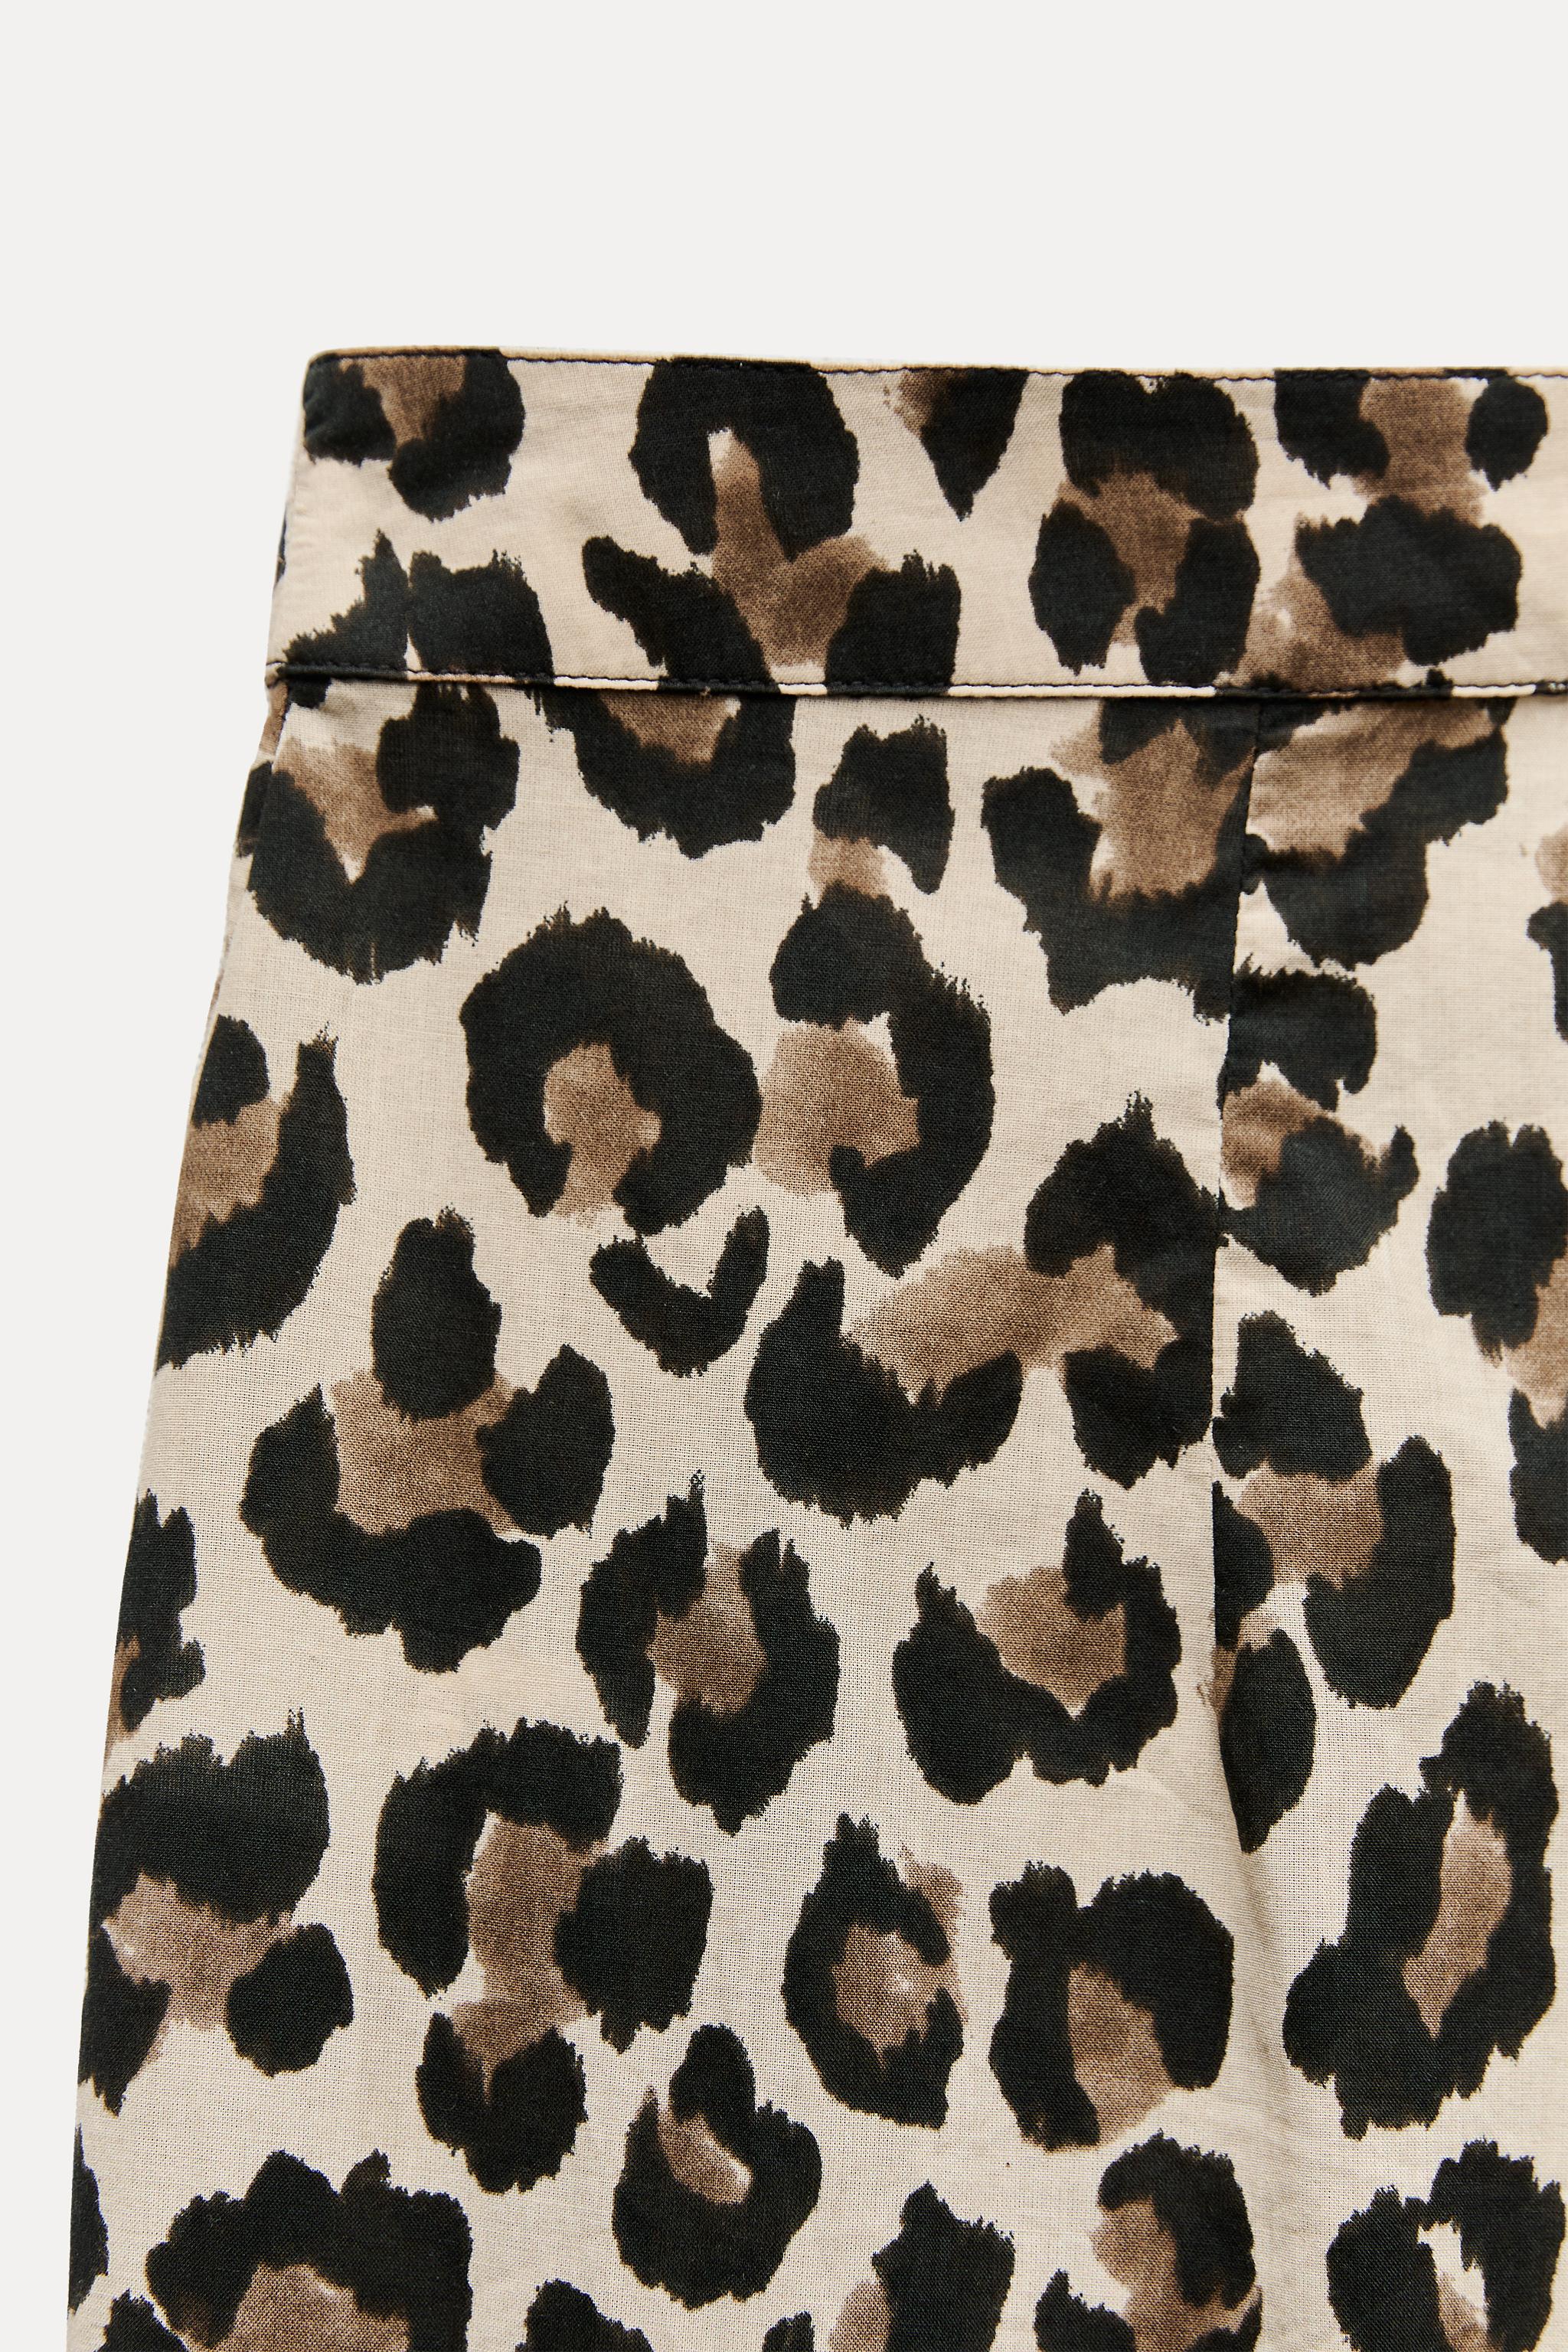 Zara Leopard Print Shirt Size S – SwapUp